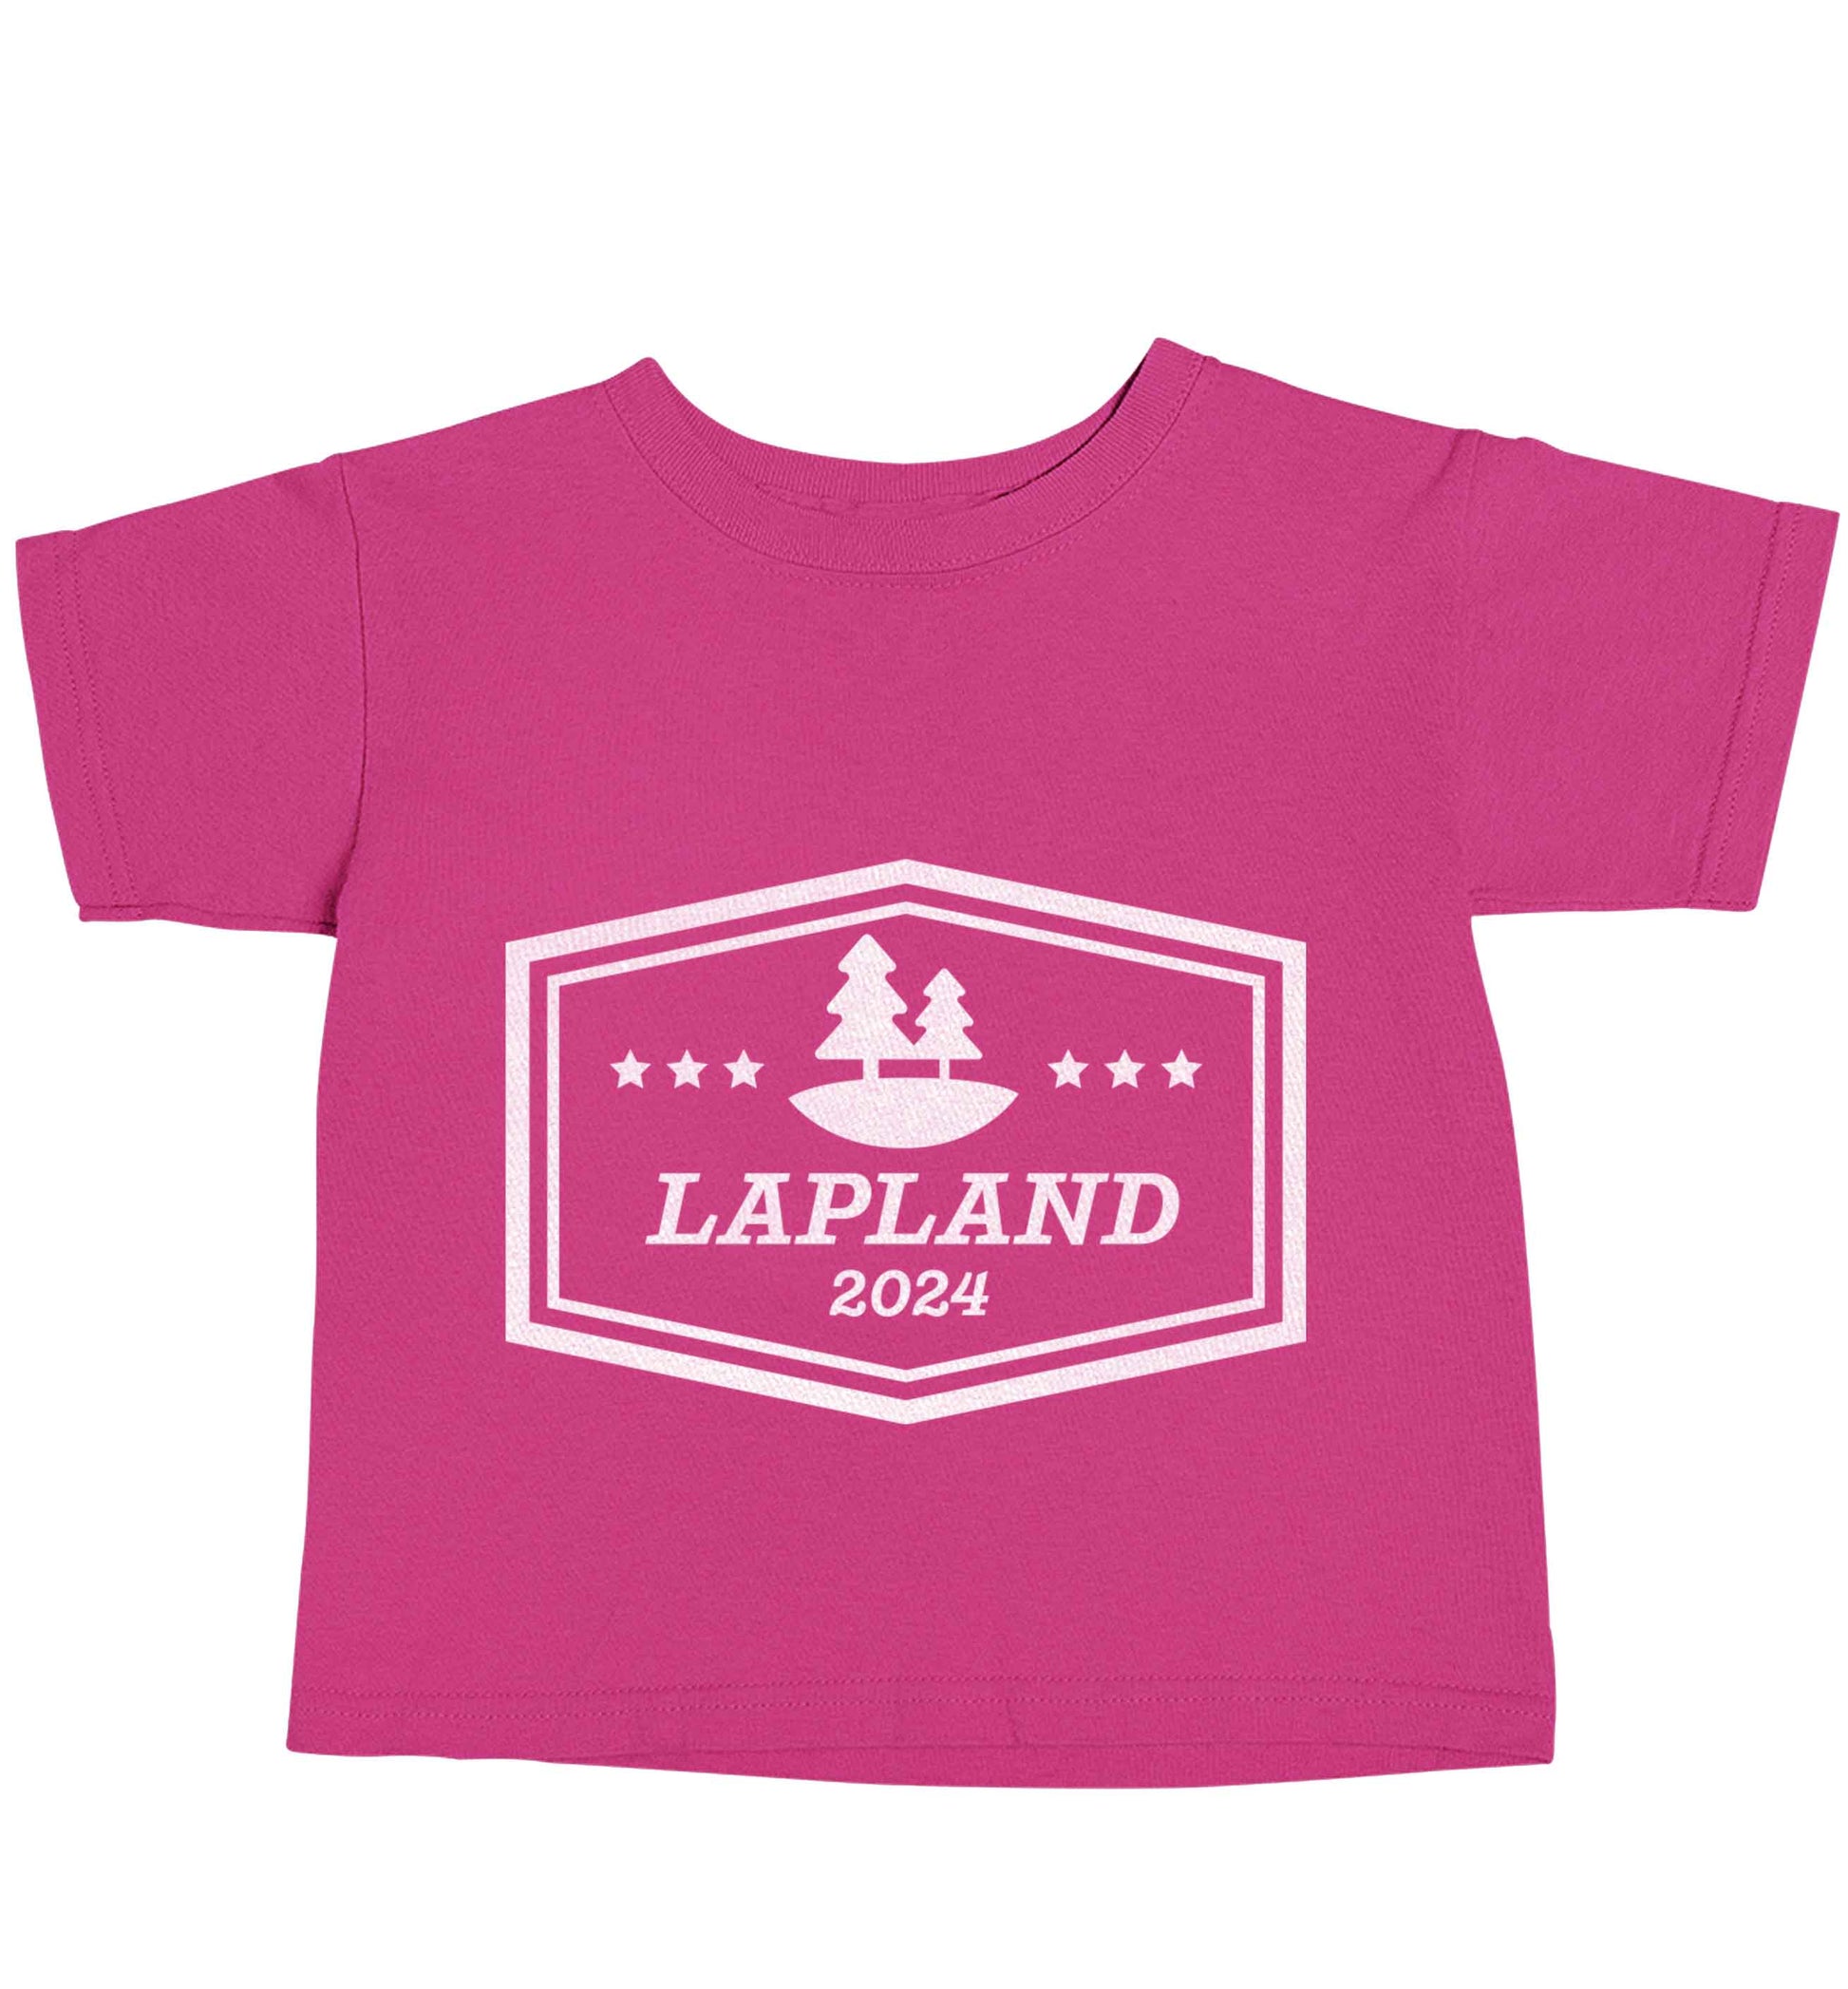 Custom date Lapland pink baby toddler Tshirt 2 Years